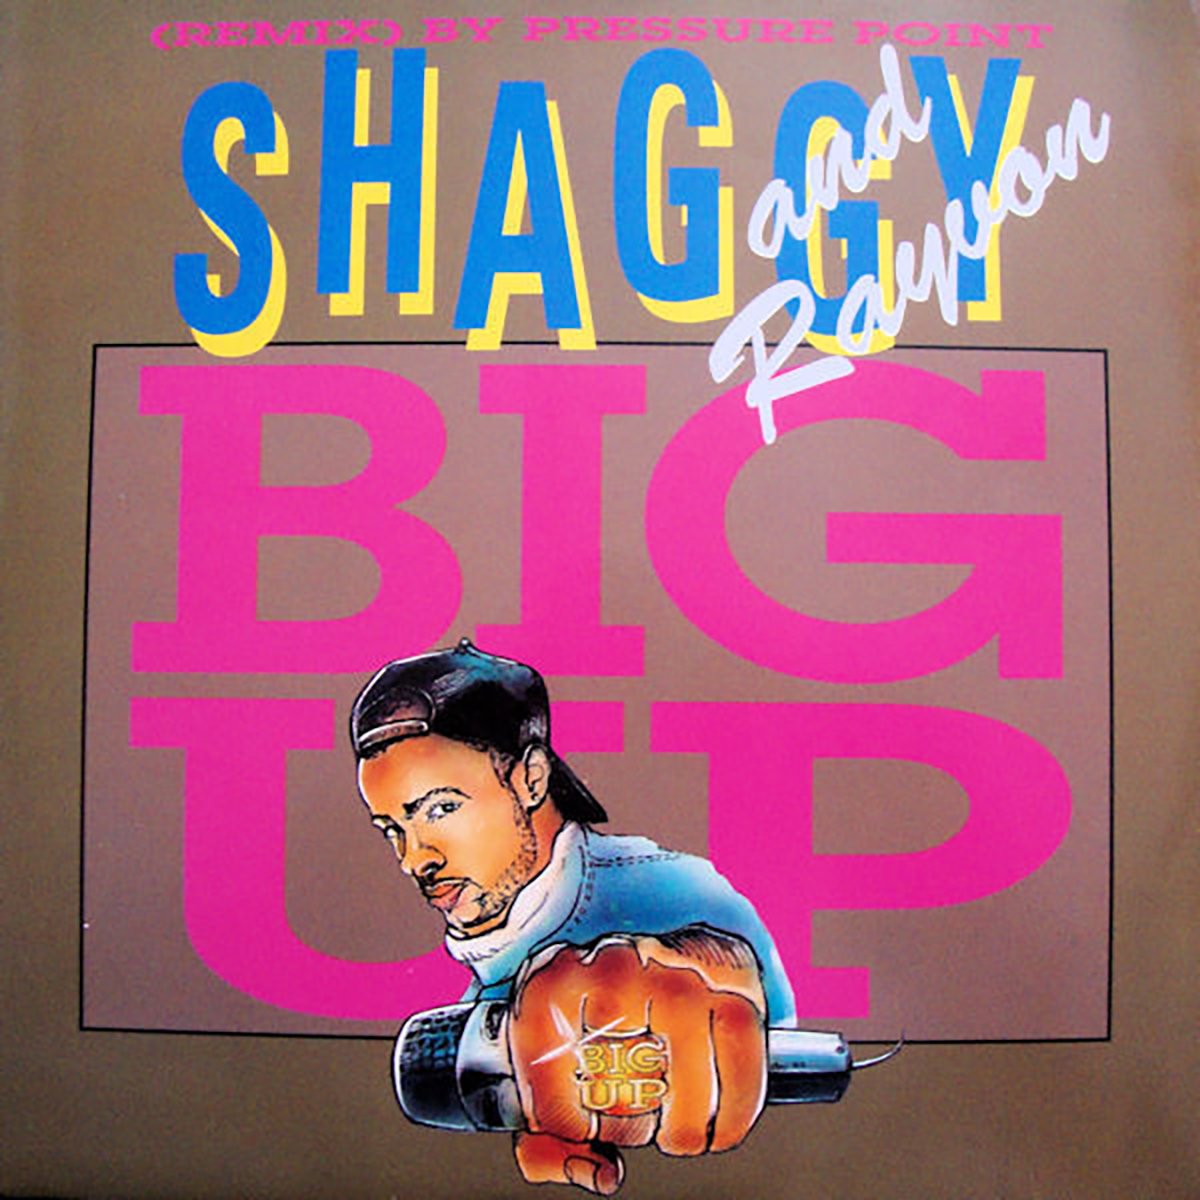 Shaggy - Big Up